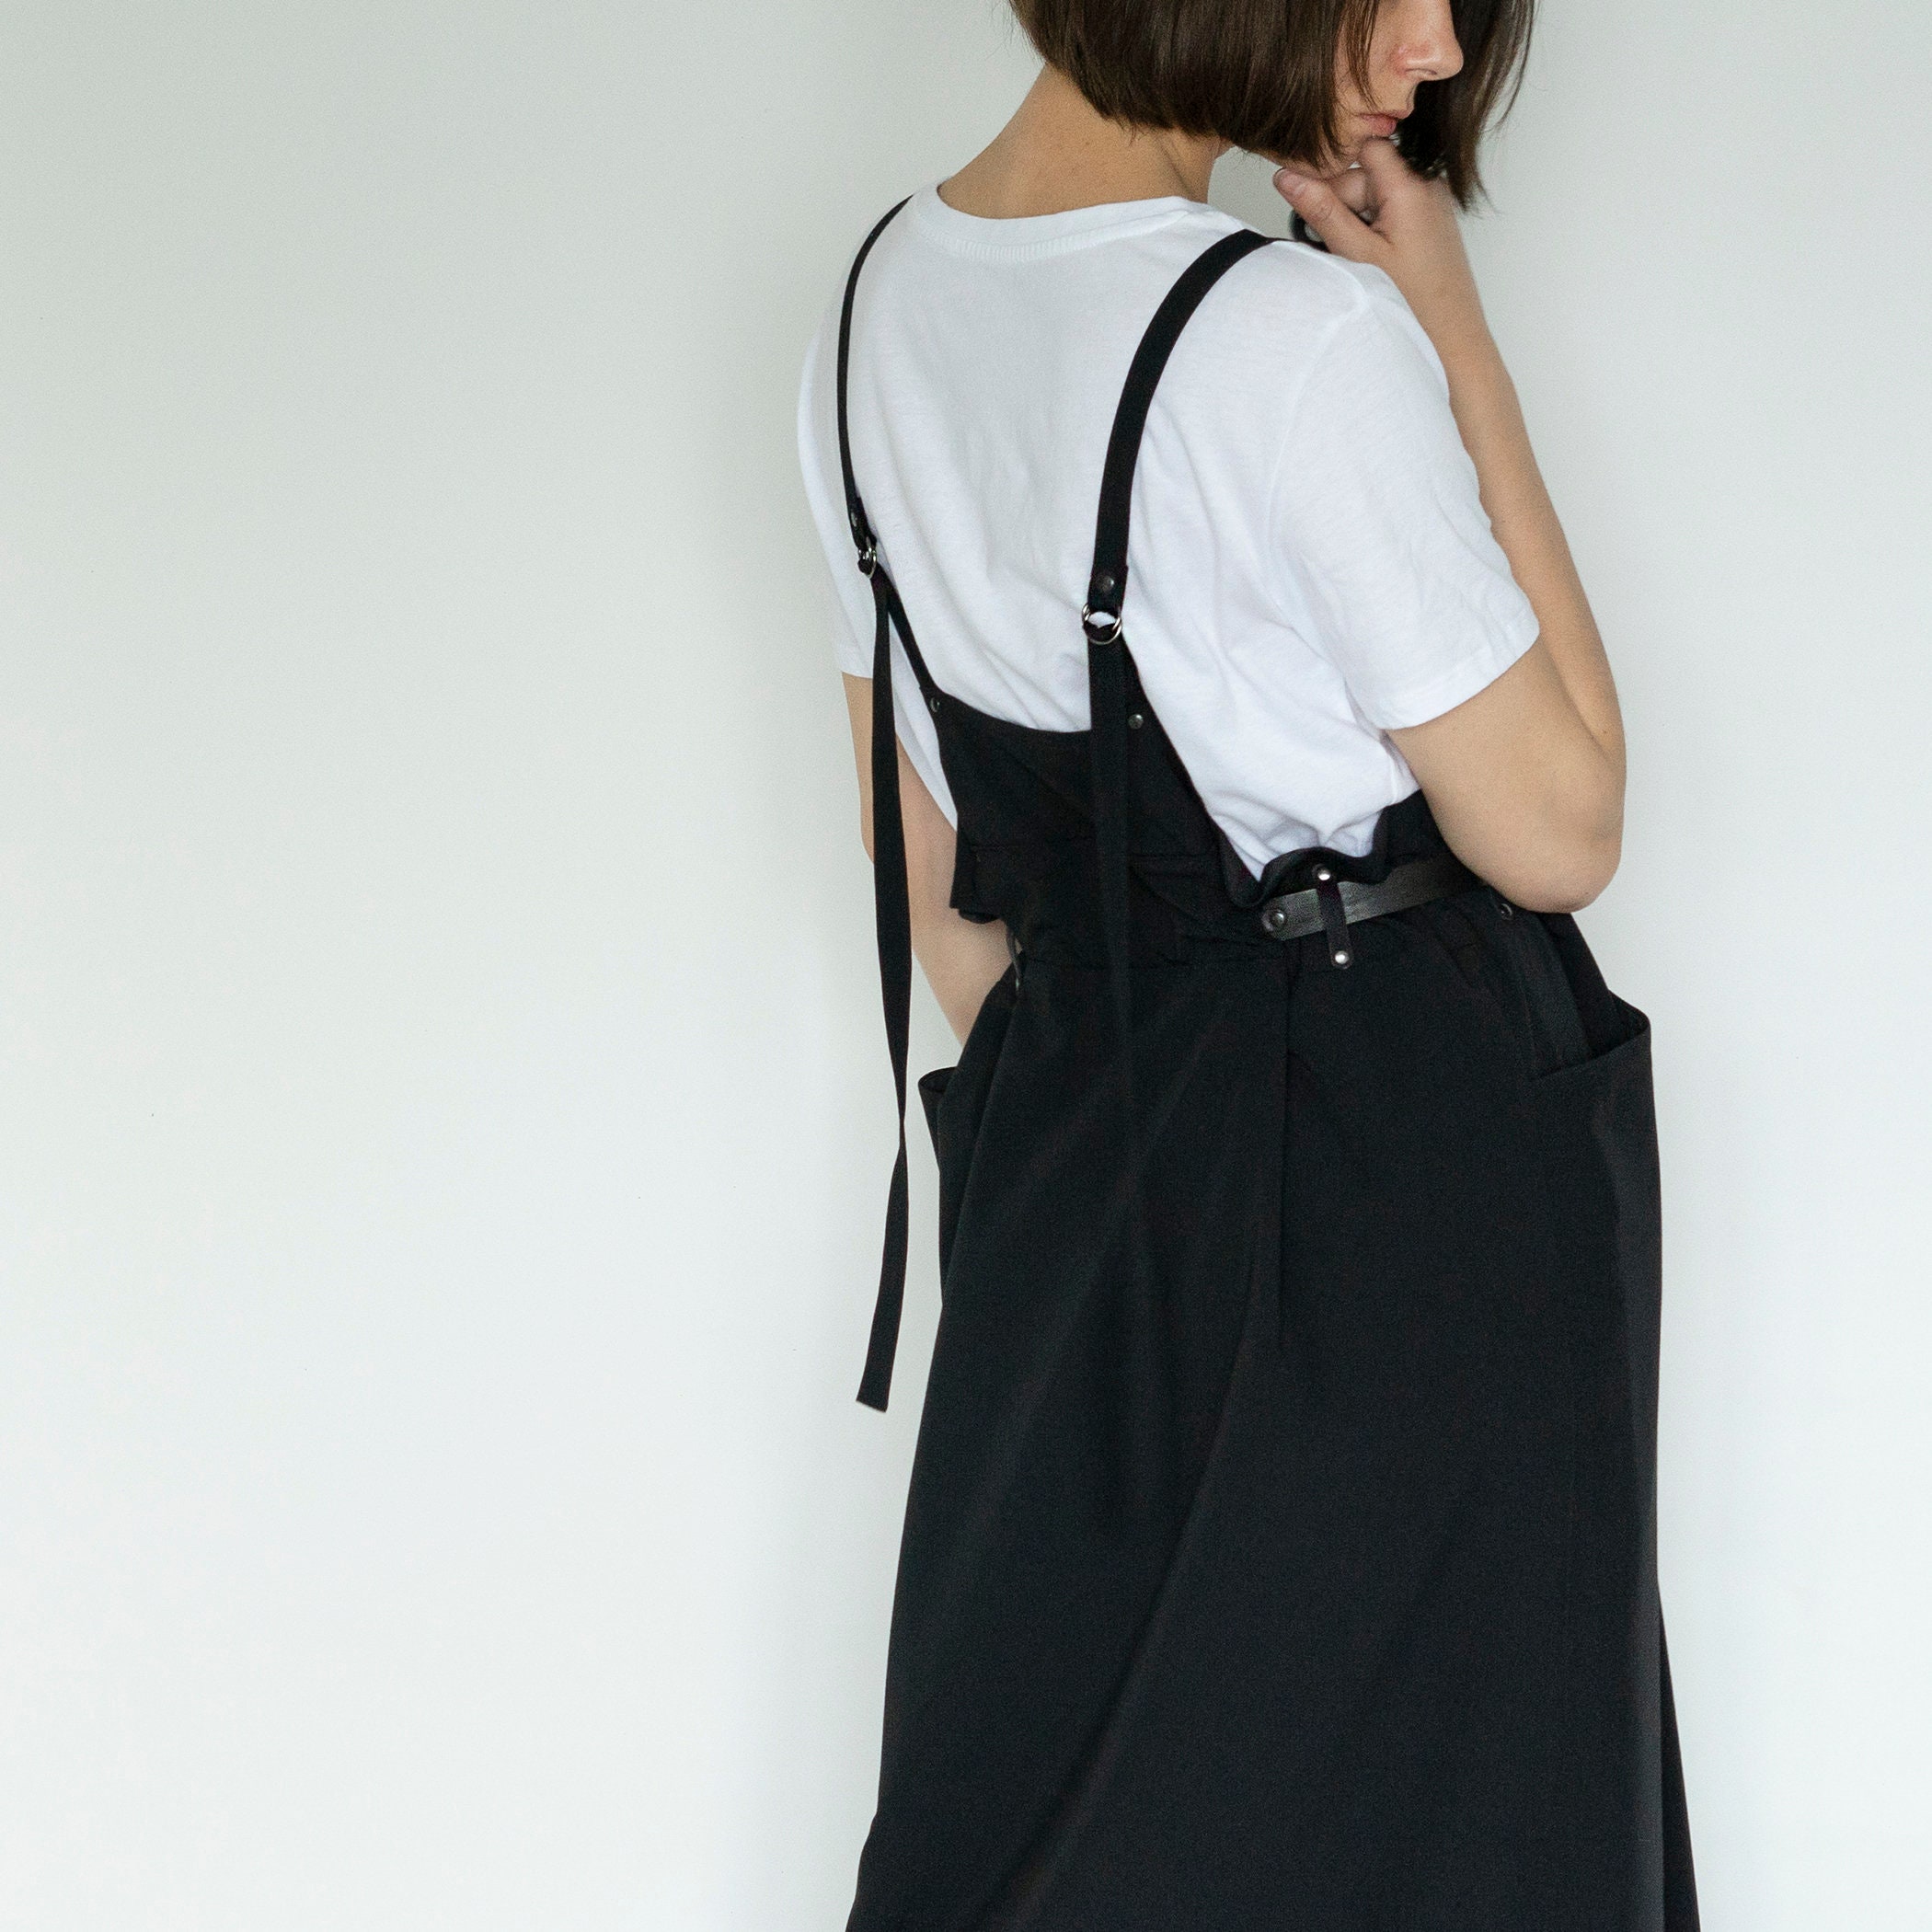 Black High Waisted Skirt Sundress With Pocket. Suspenders | Etsy